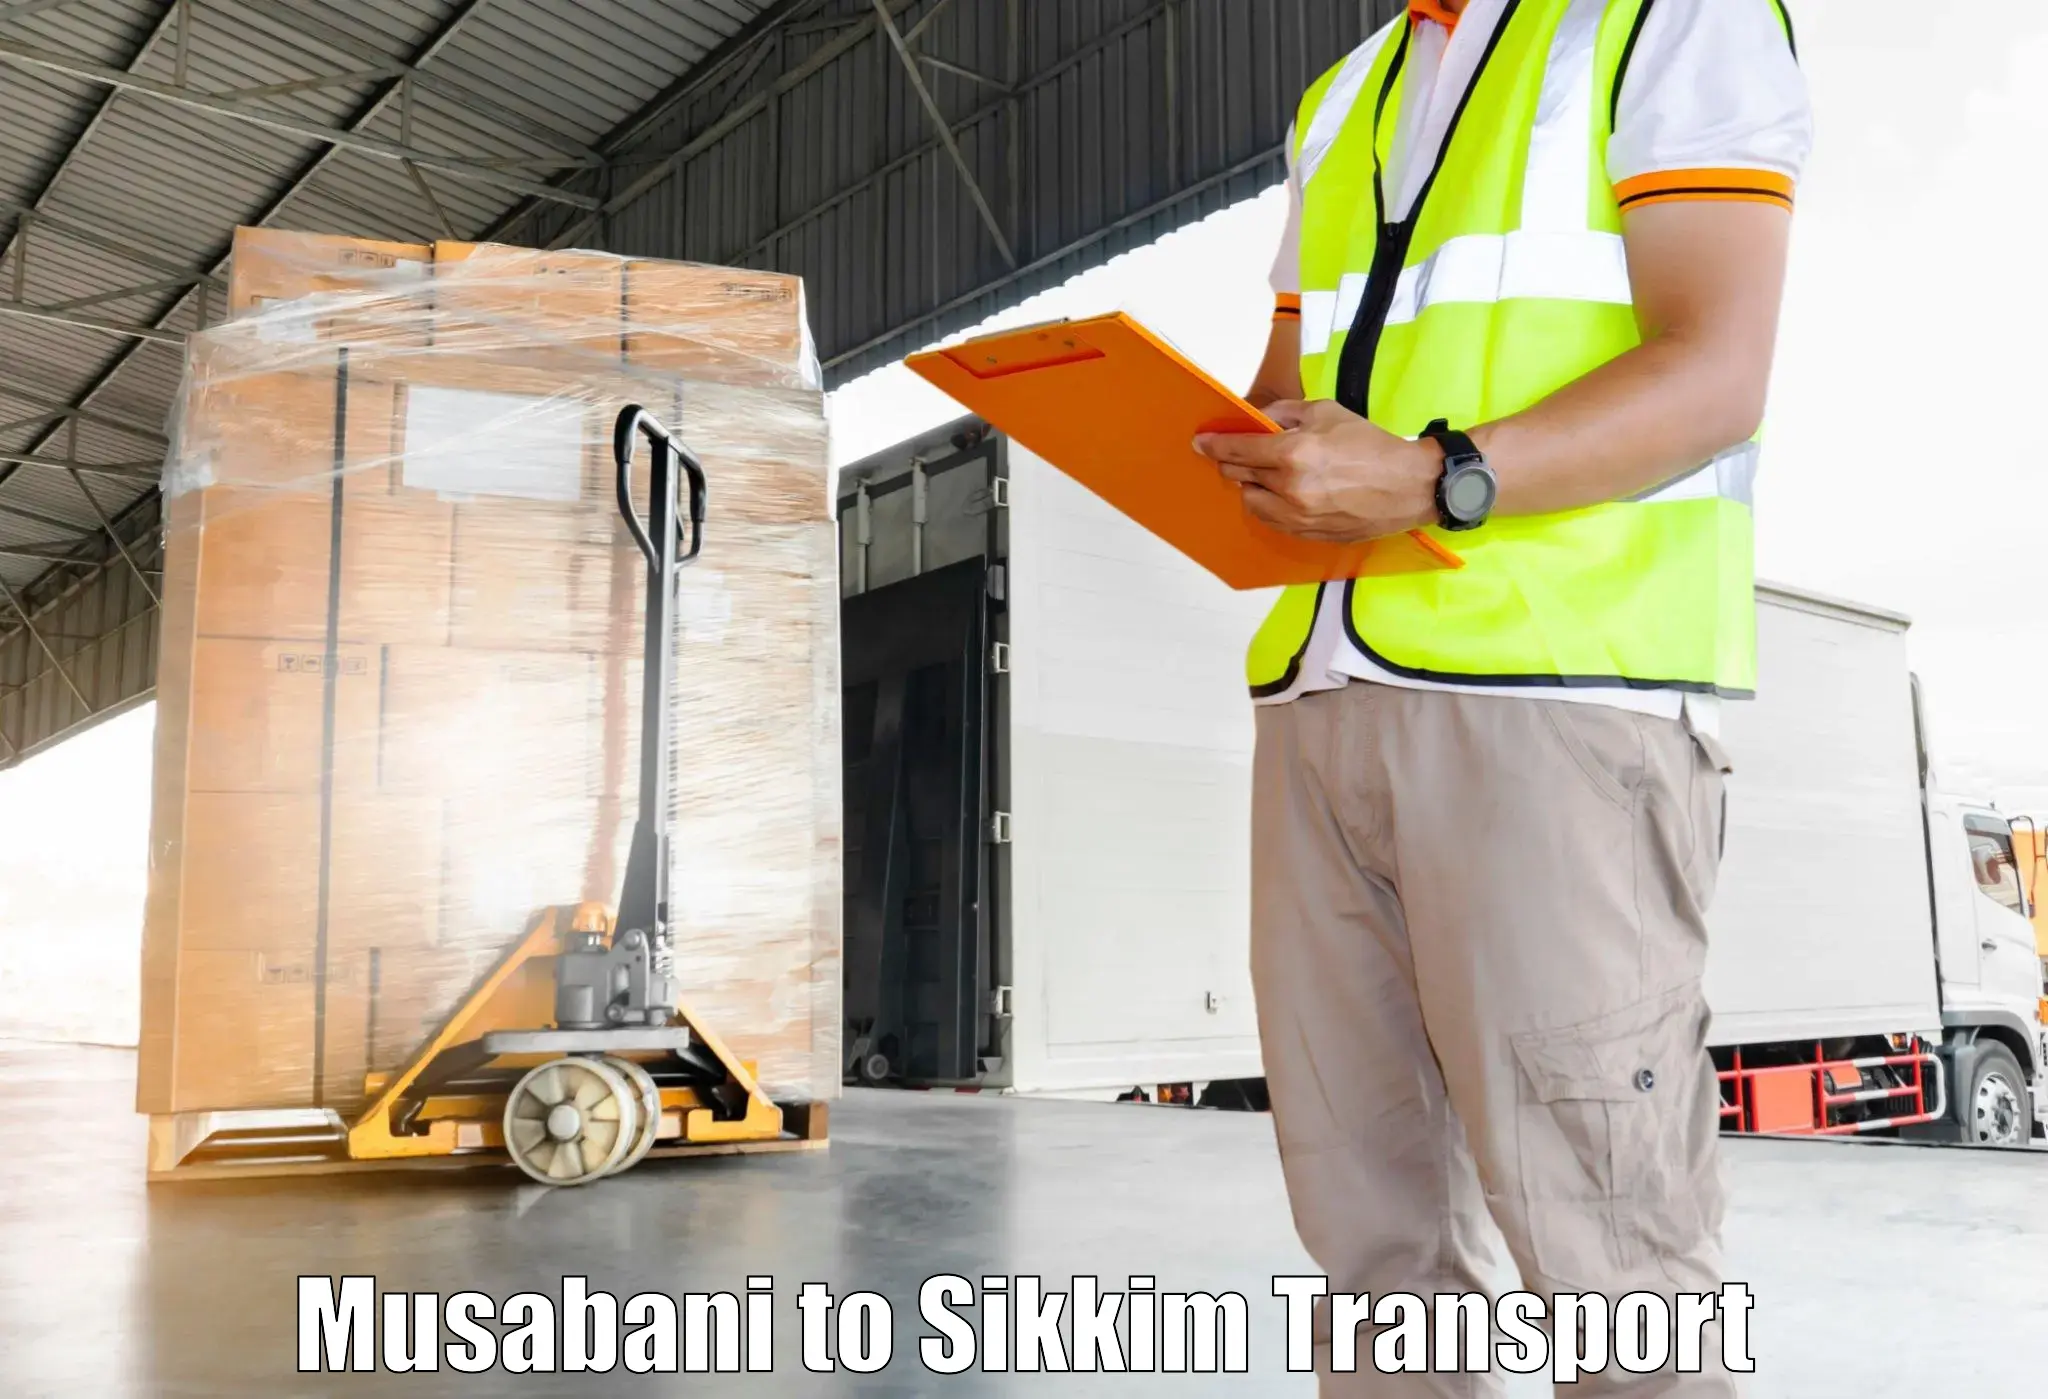 Transport in sharing Musabani to Pelling